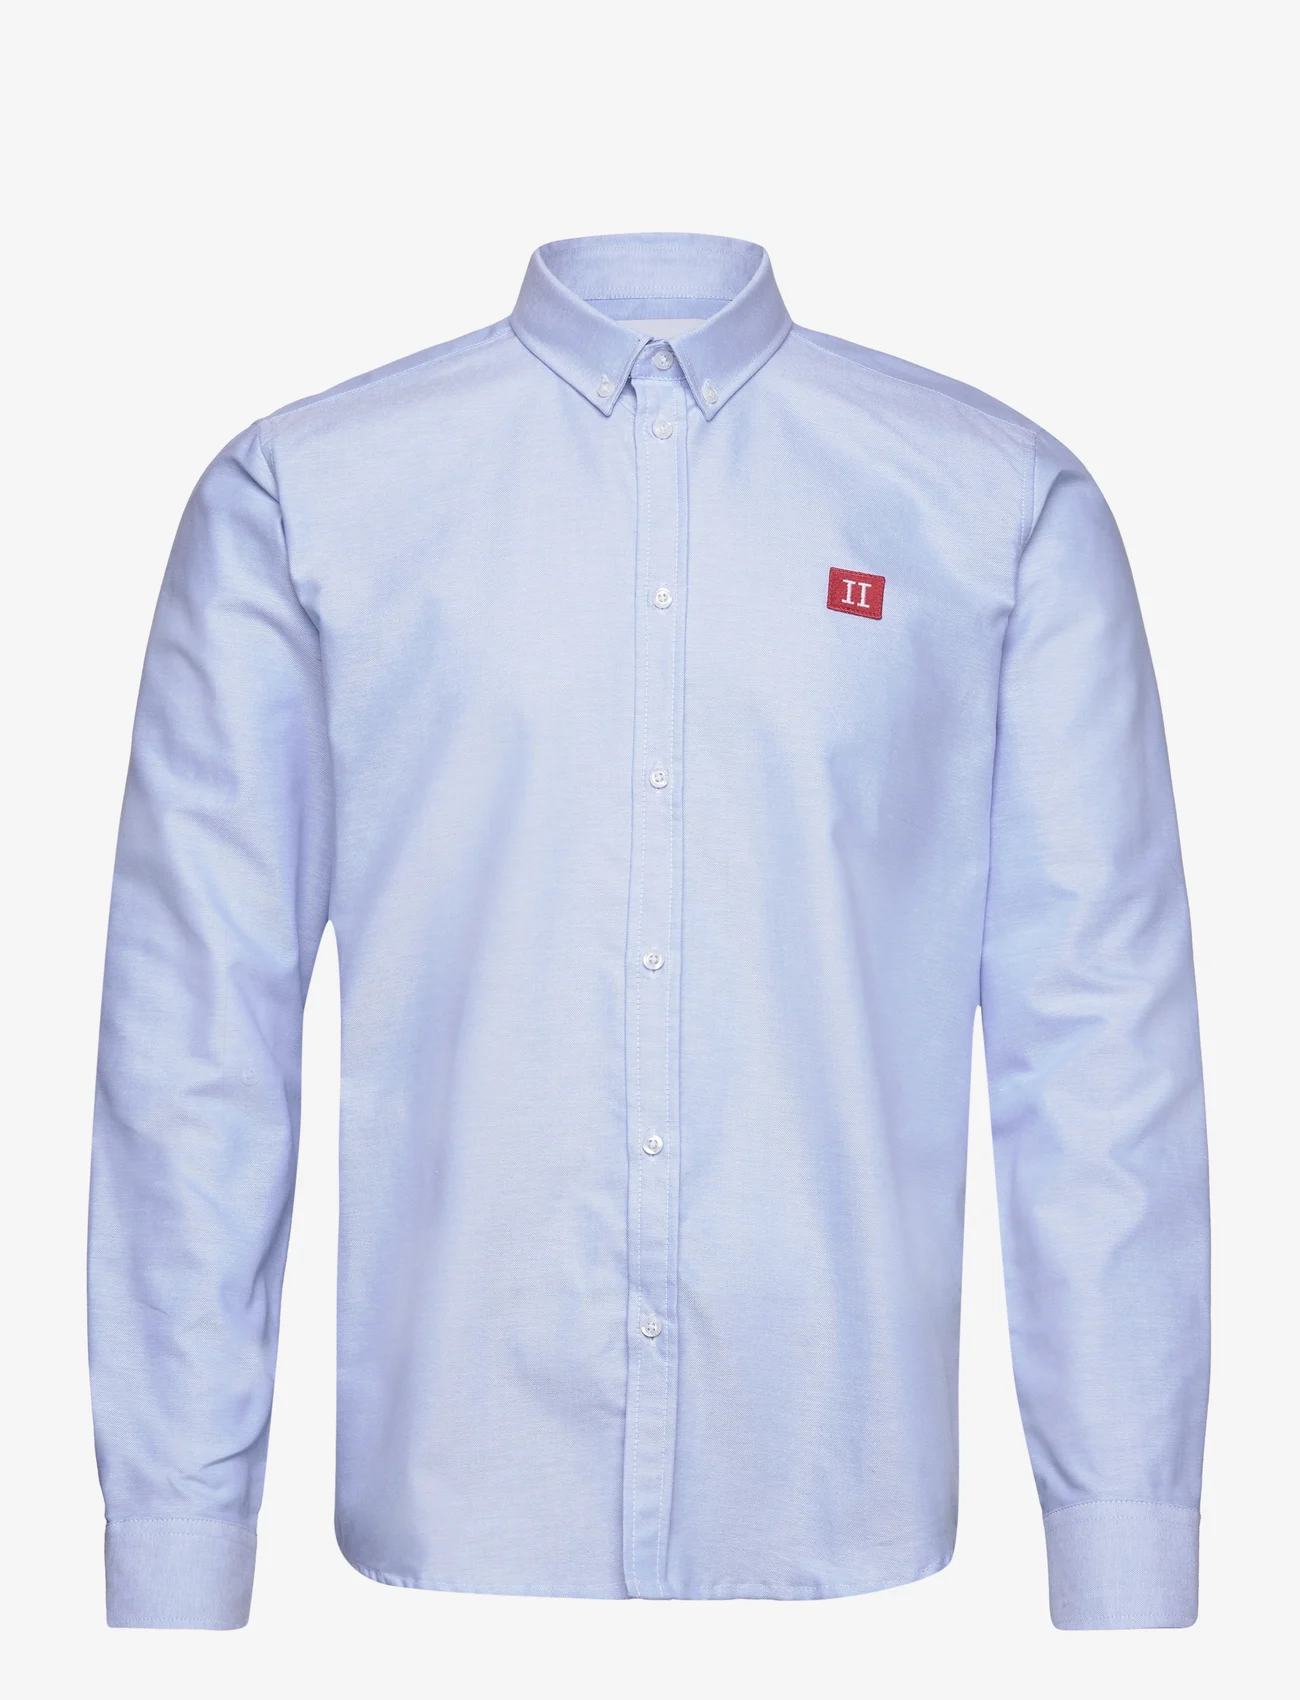 Les Deux - Piece Shirt - basic skjortor - light blue/rust red-white - 0